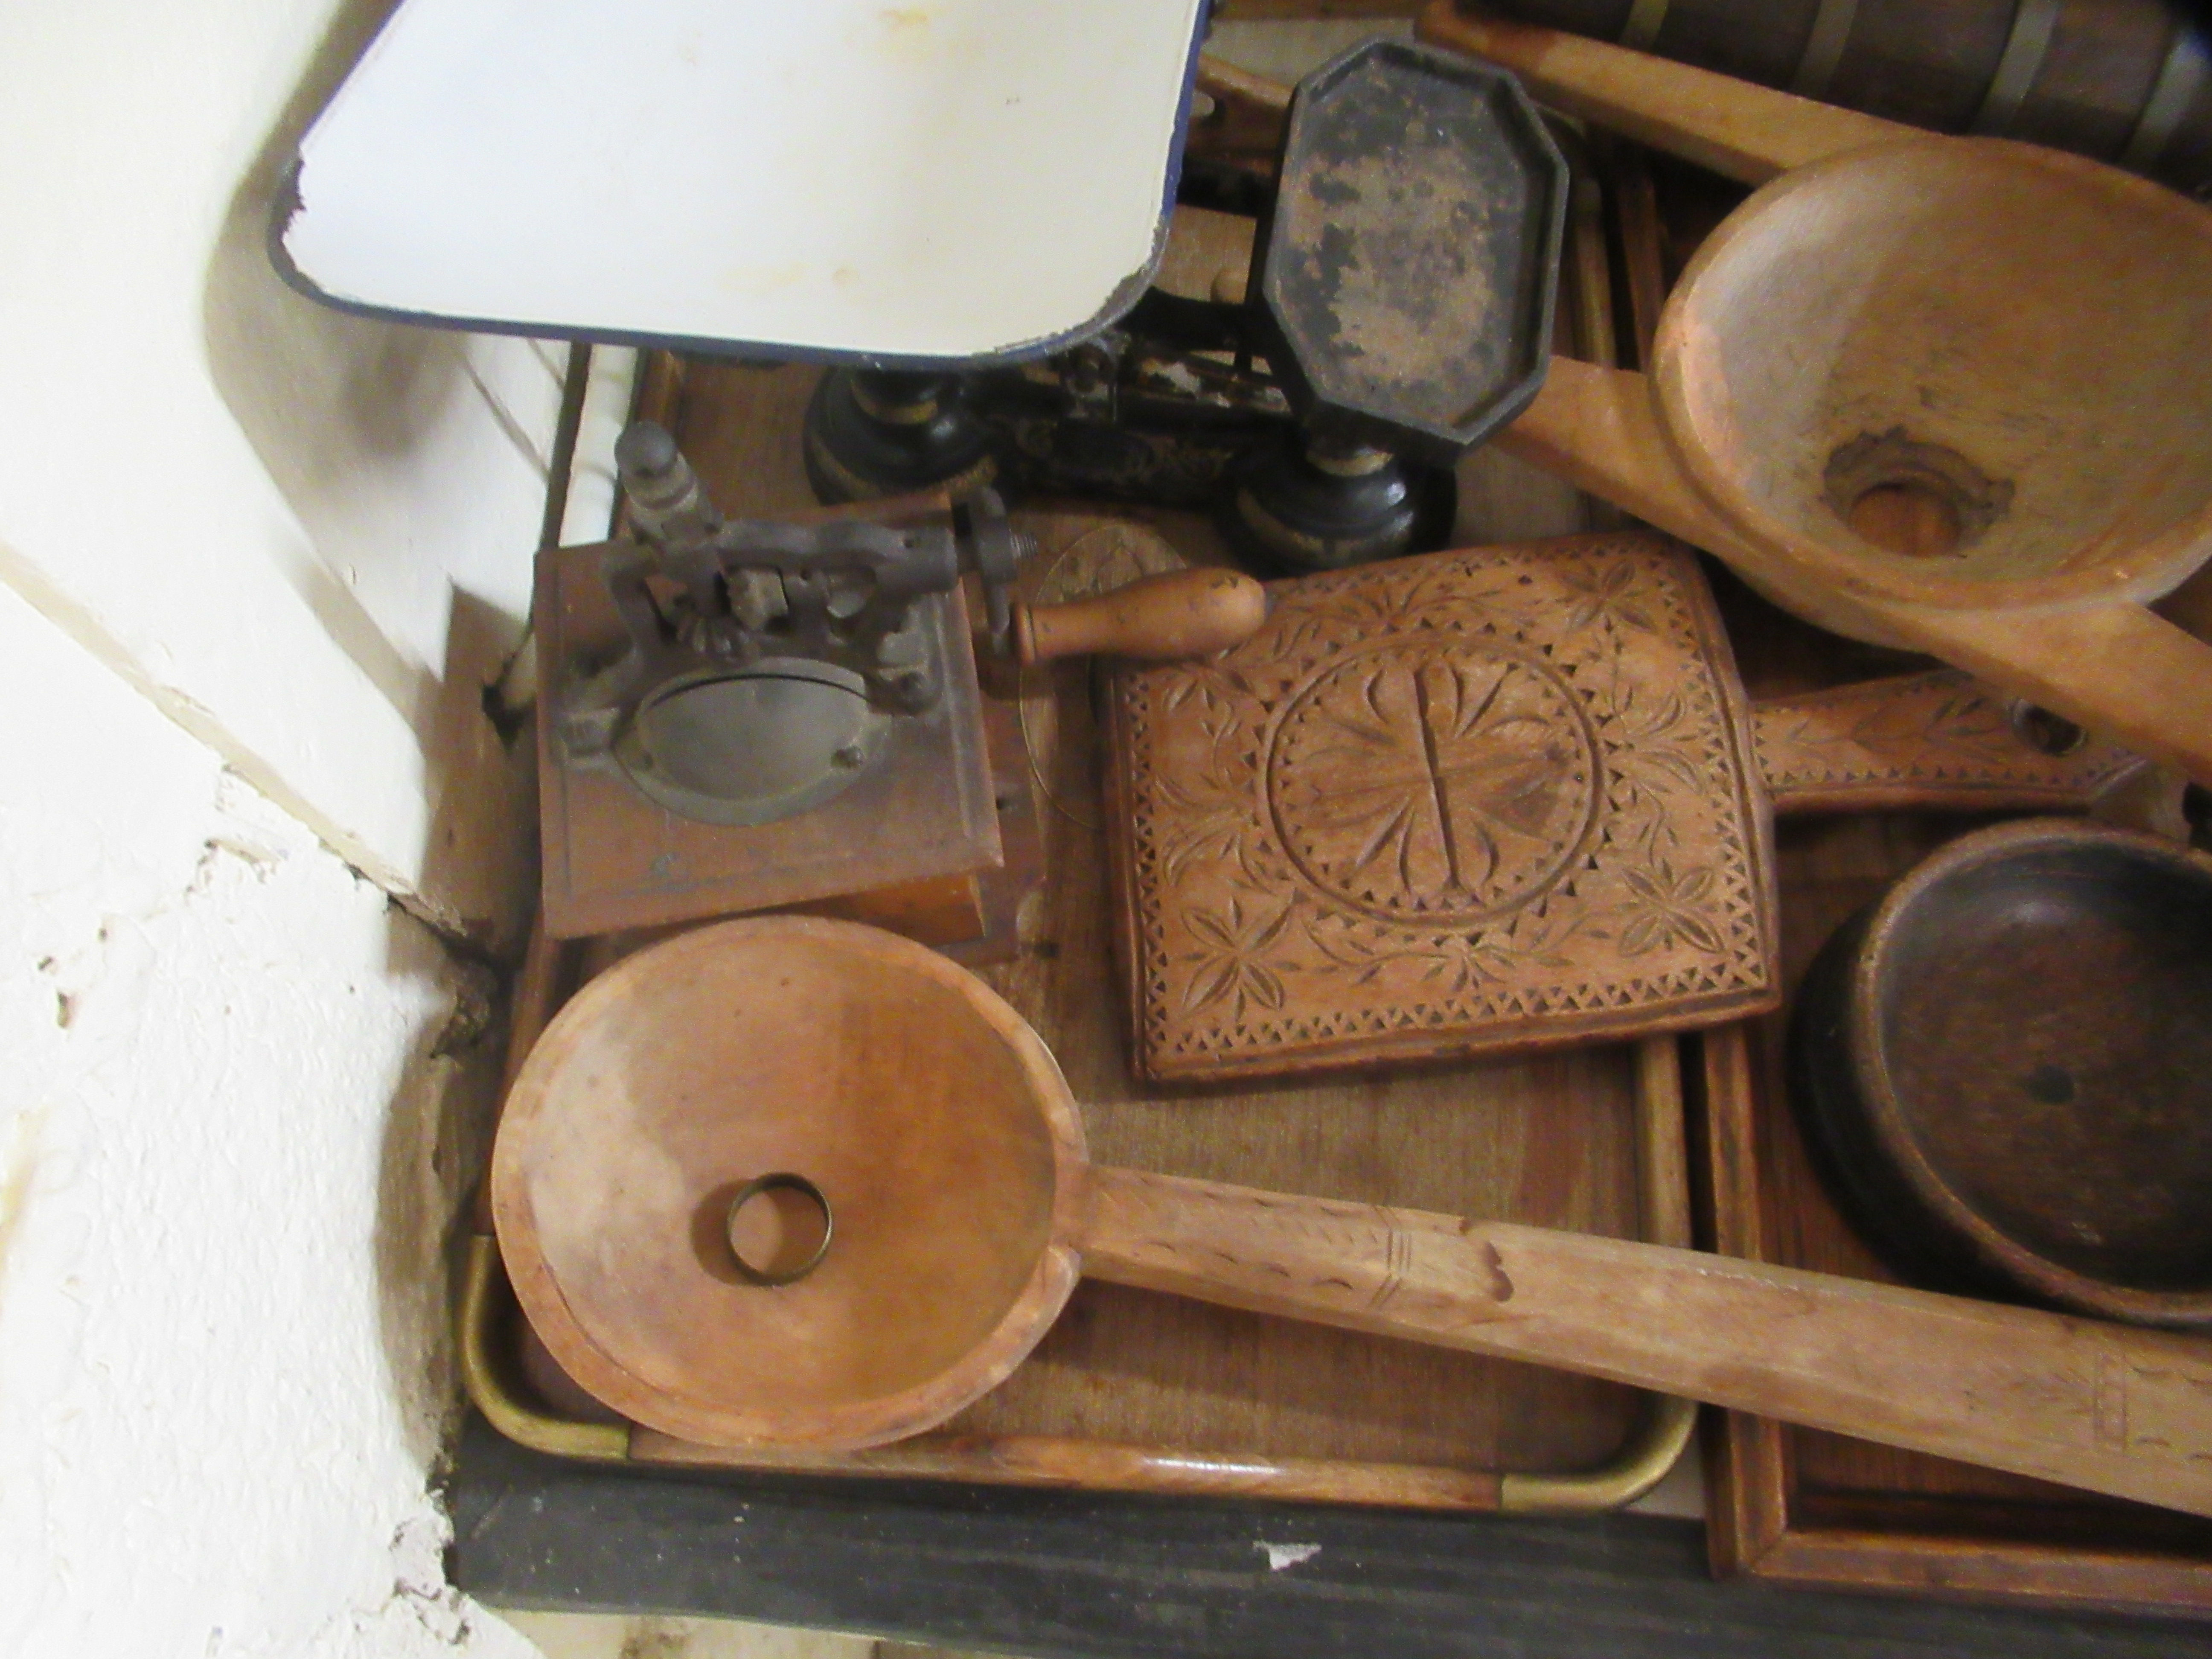 Wooden implements and vintage kitchen bygones - Image 2 of 7